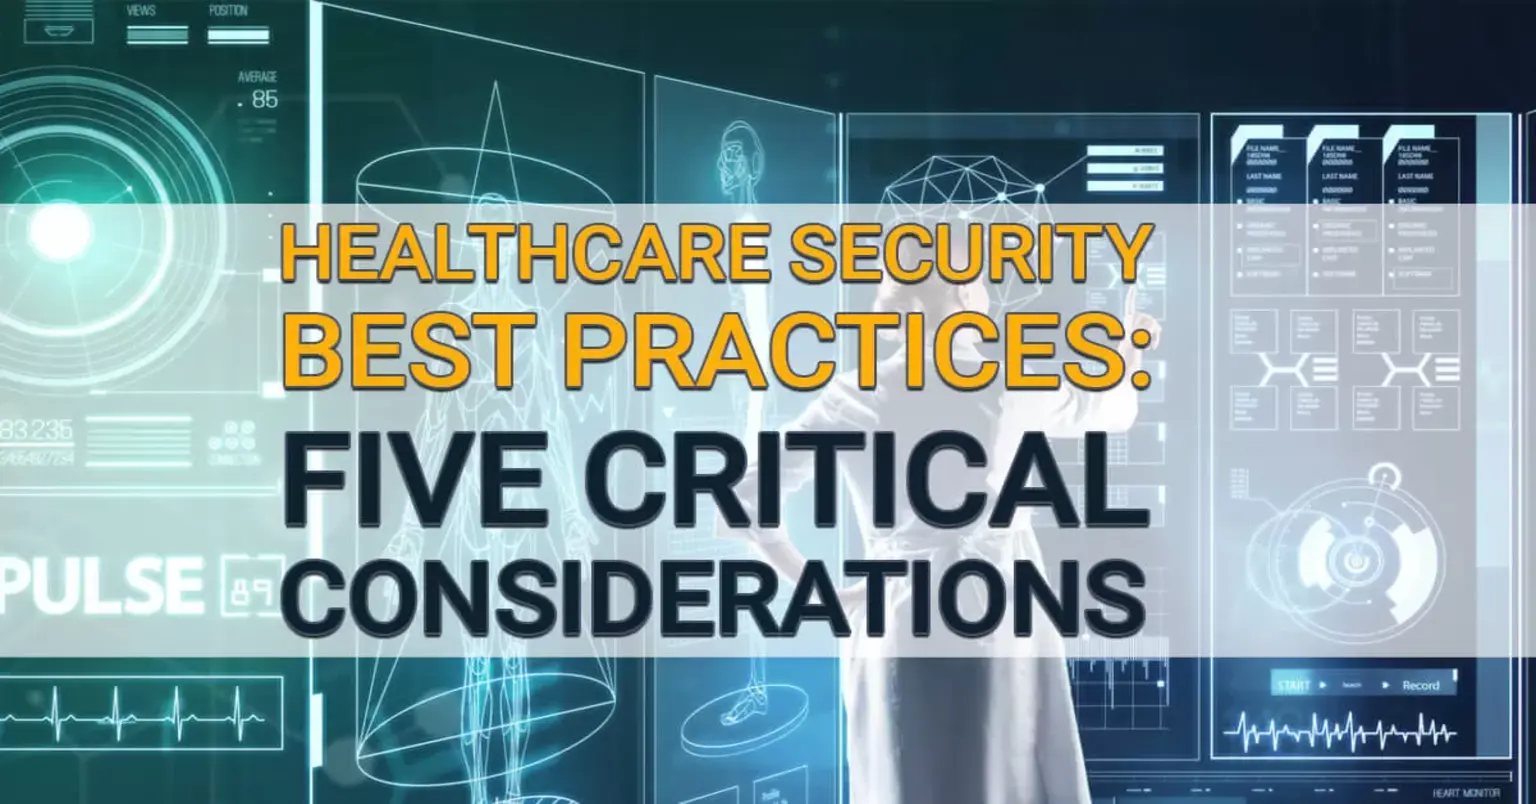 Healthcare Security Best Practices